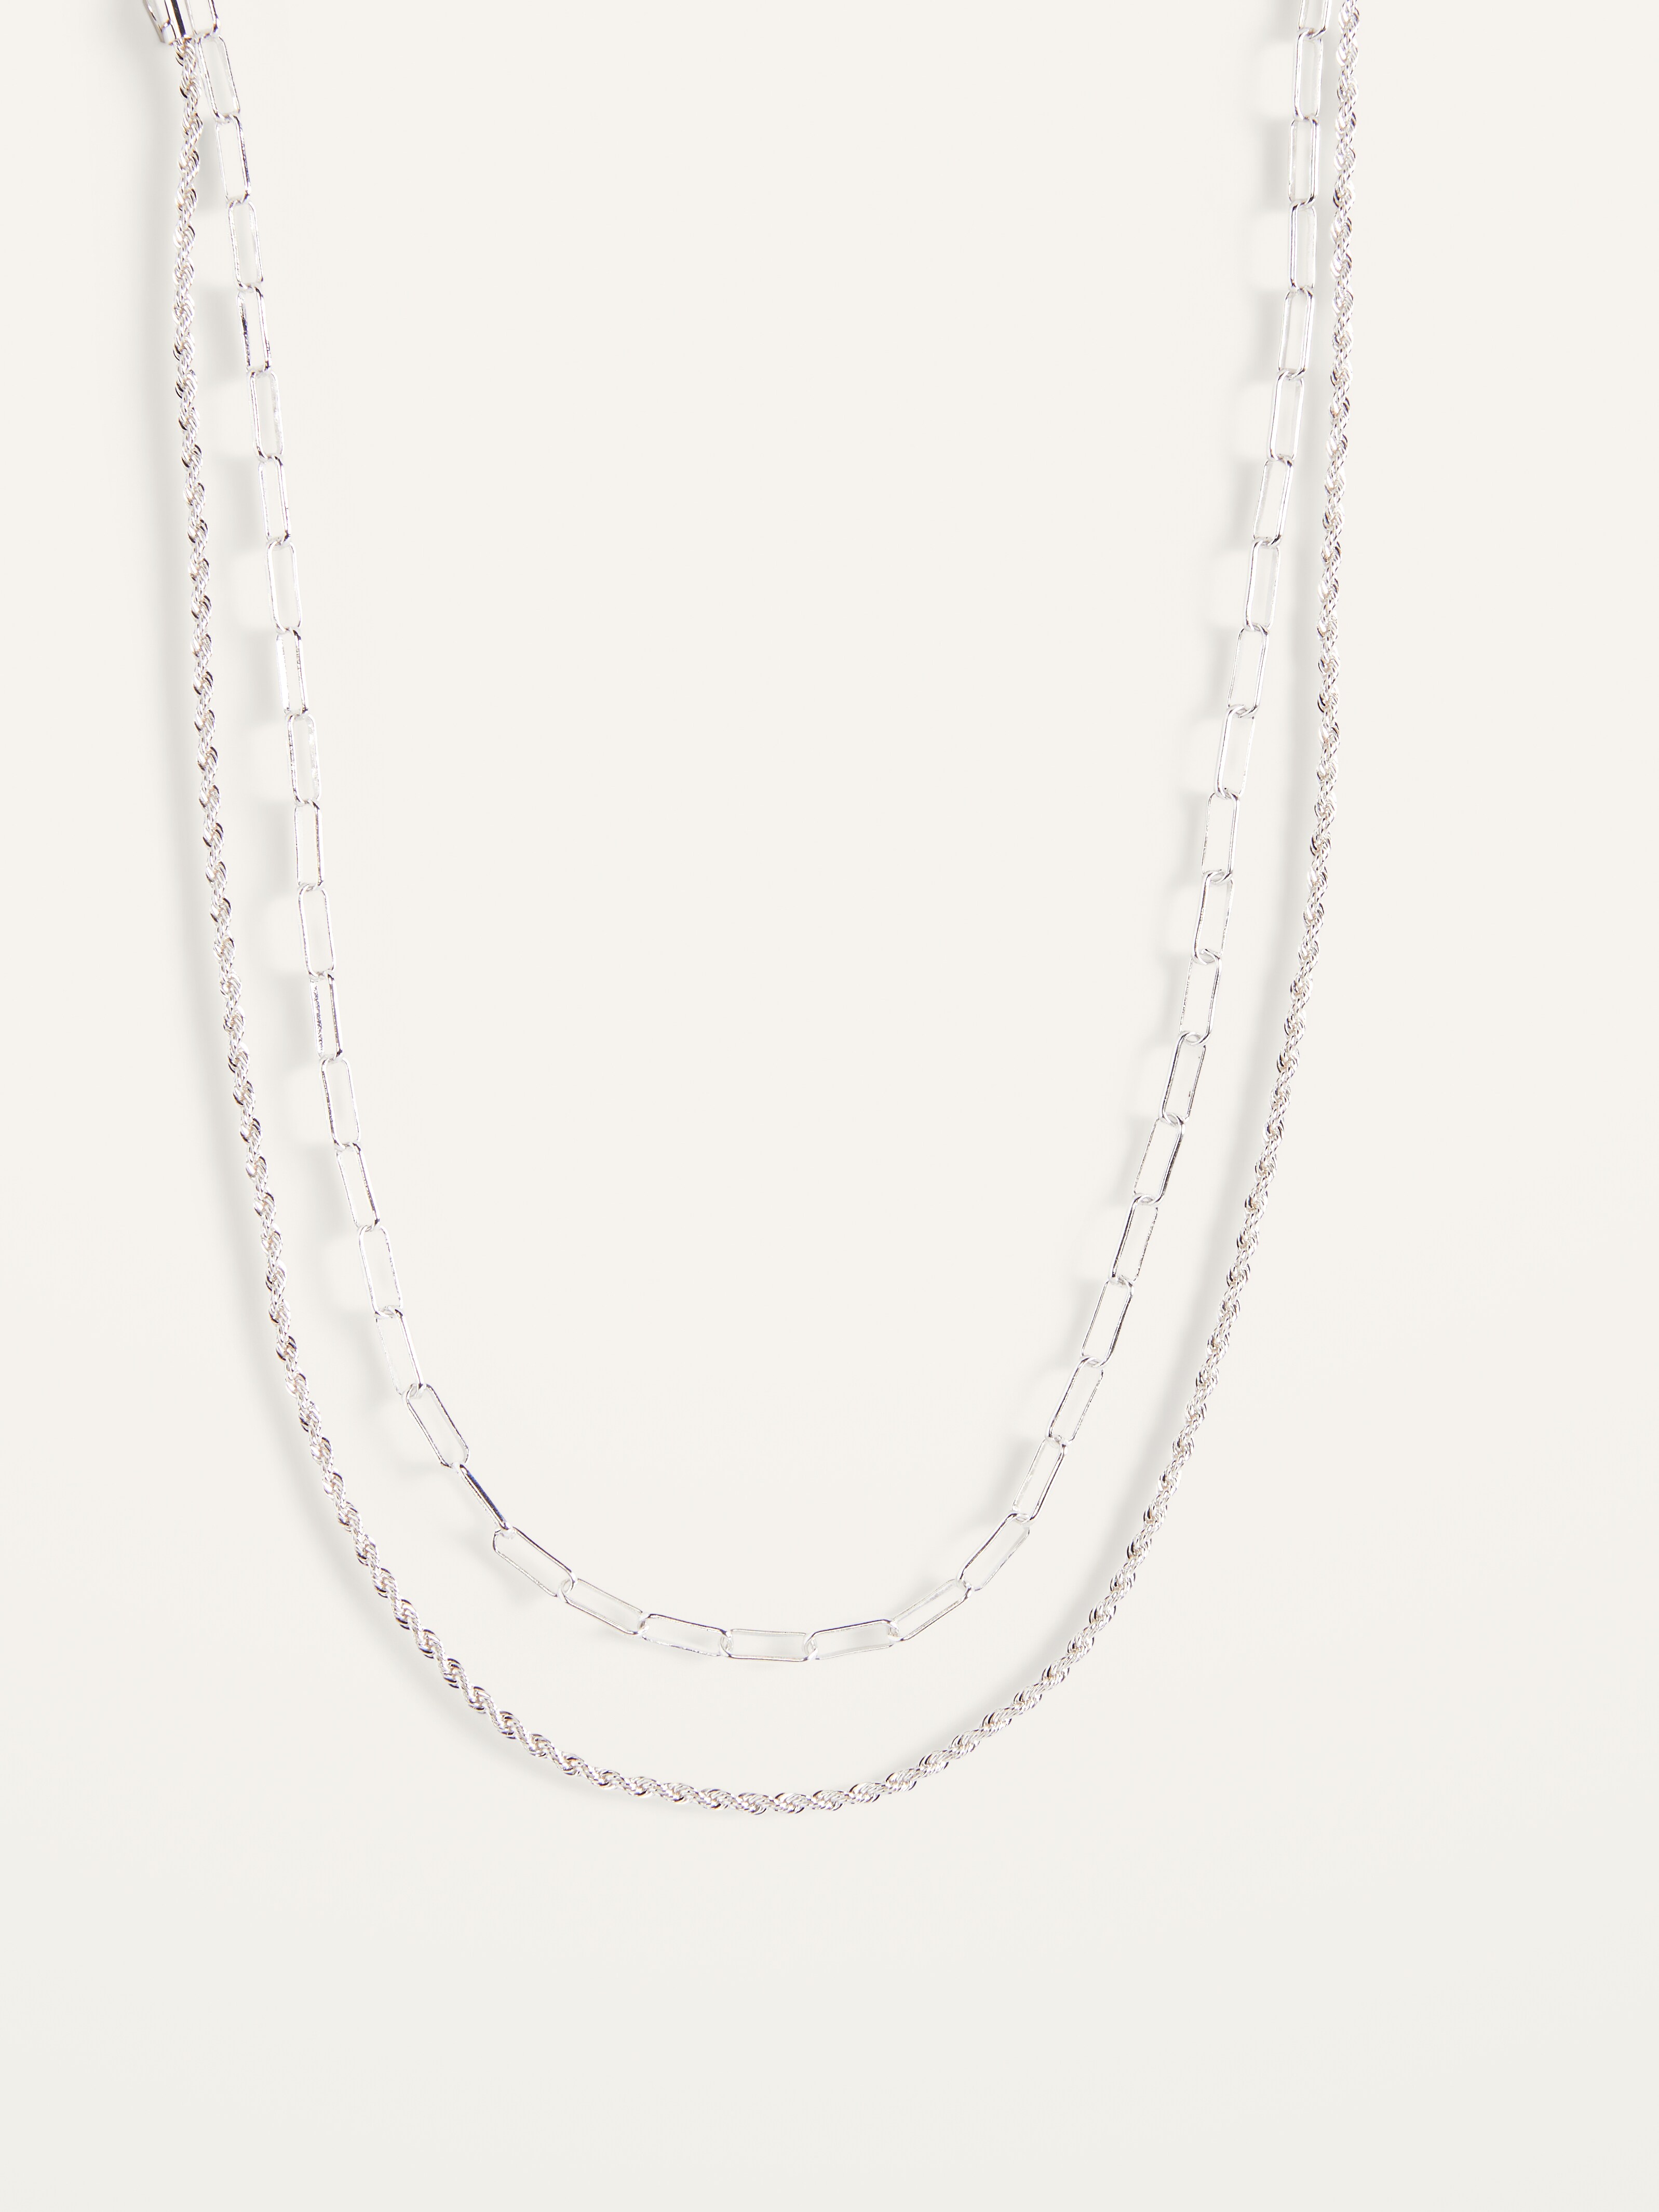 Hannah Montana Pendant Silver Tone Chain Necklace Item 5829 